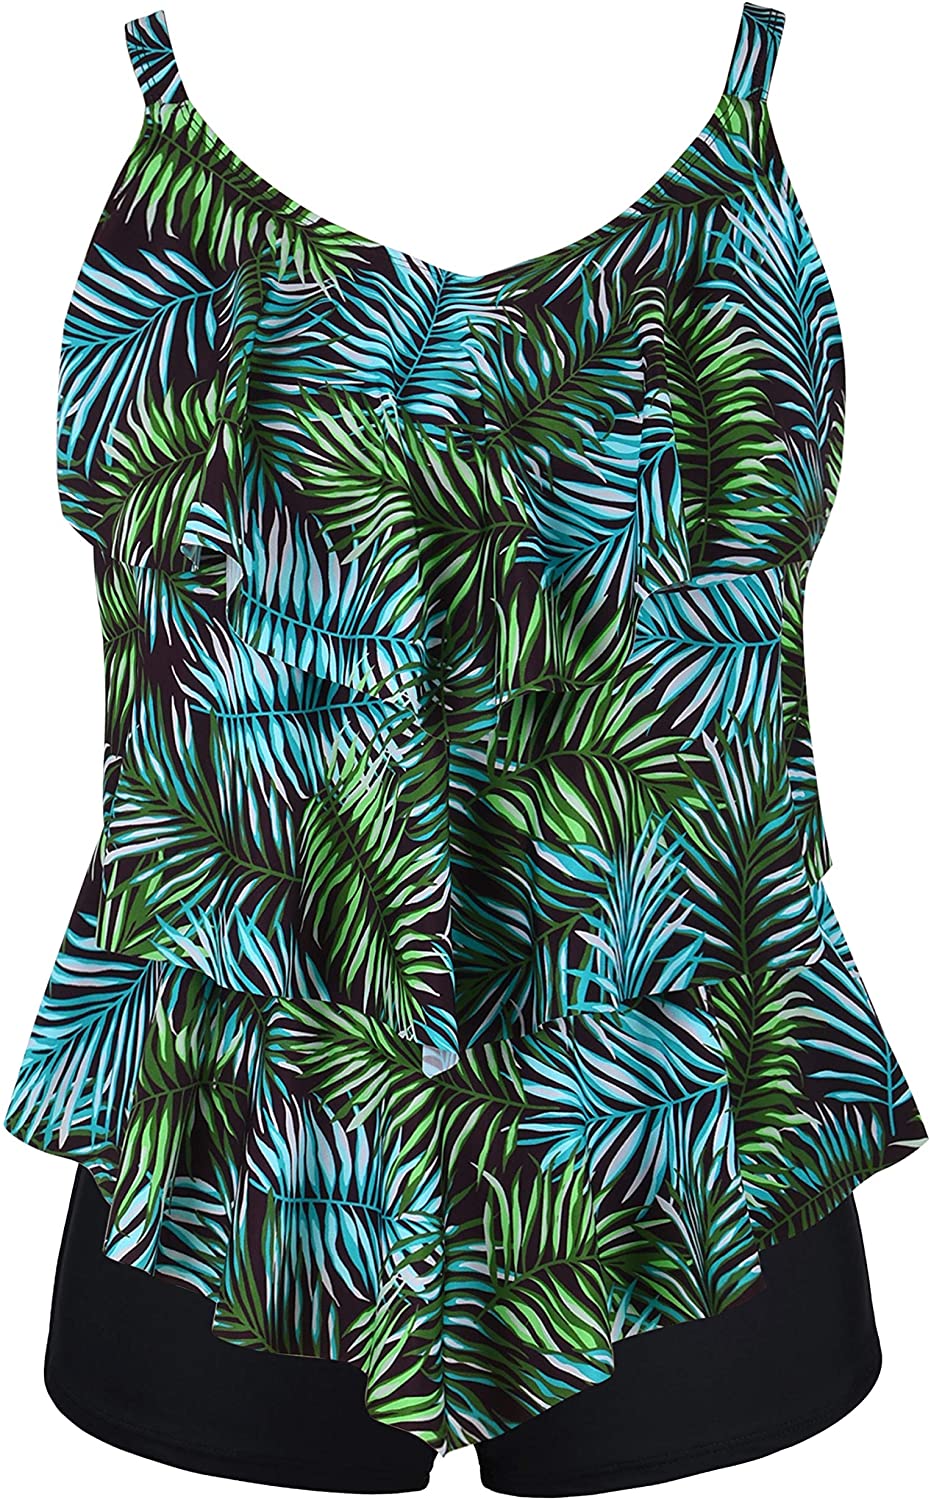 Septangle Women/'s Tankini Set Ruffle Swimwear Two Pieces Swimsuit